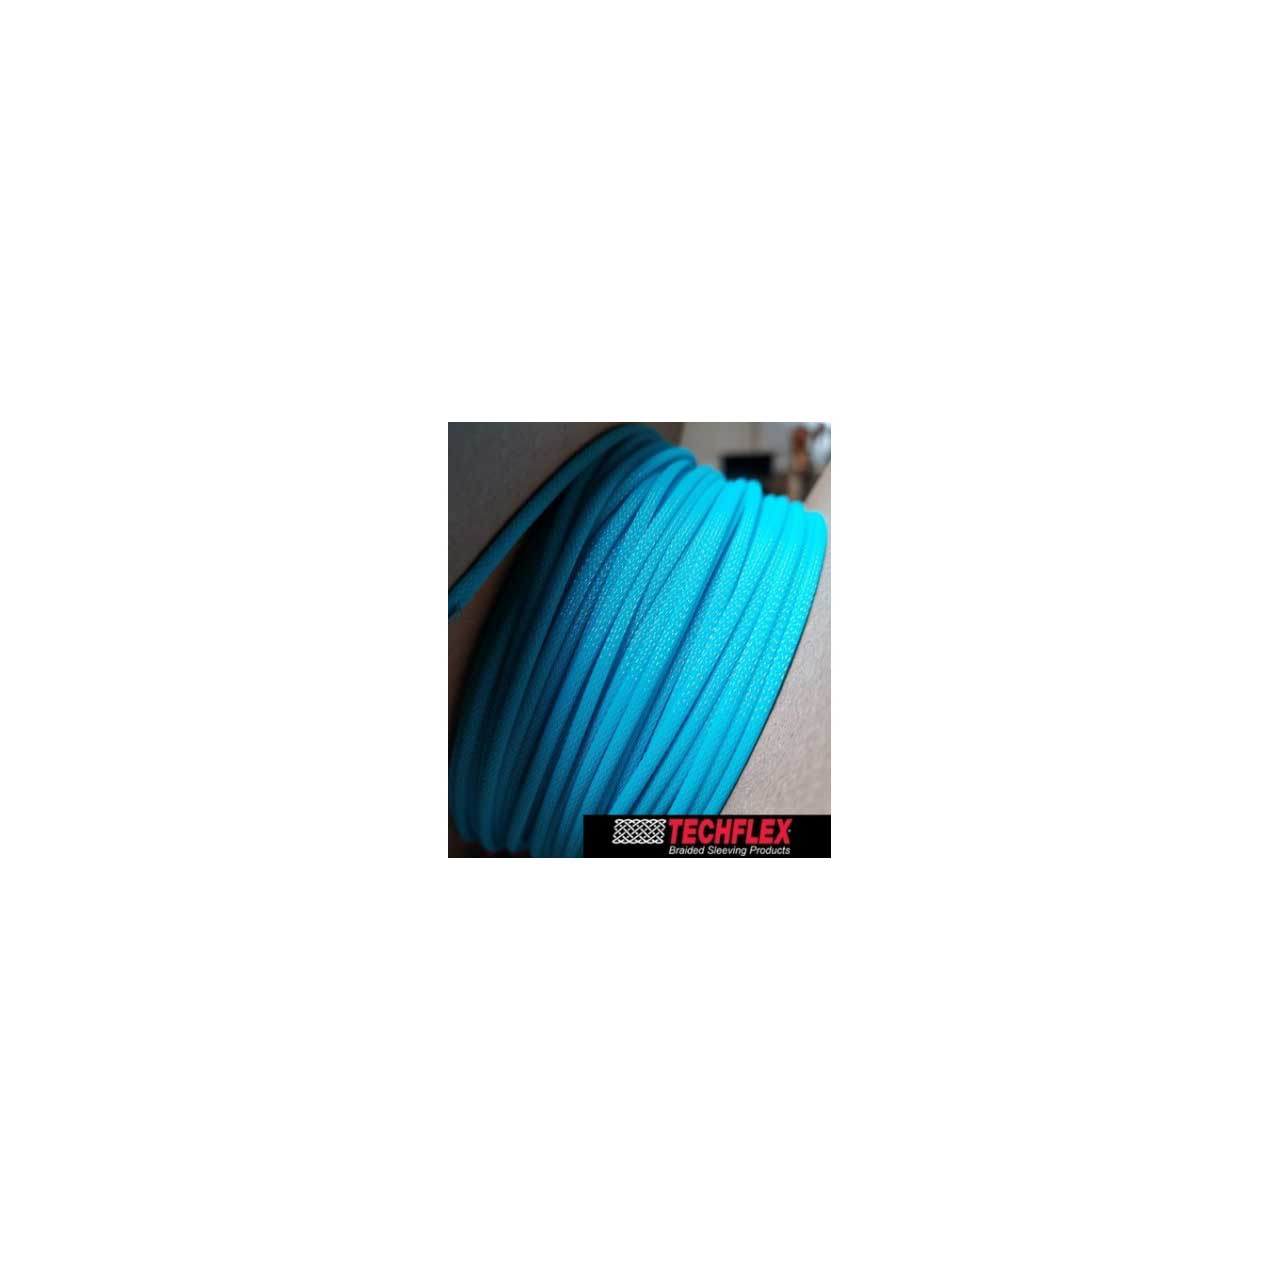 Techflex PTN0.25TE 1/4 Inch FLEXO PET Cable Tubing - Teal Blue - 200 Foot Roll